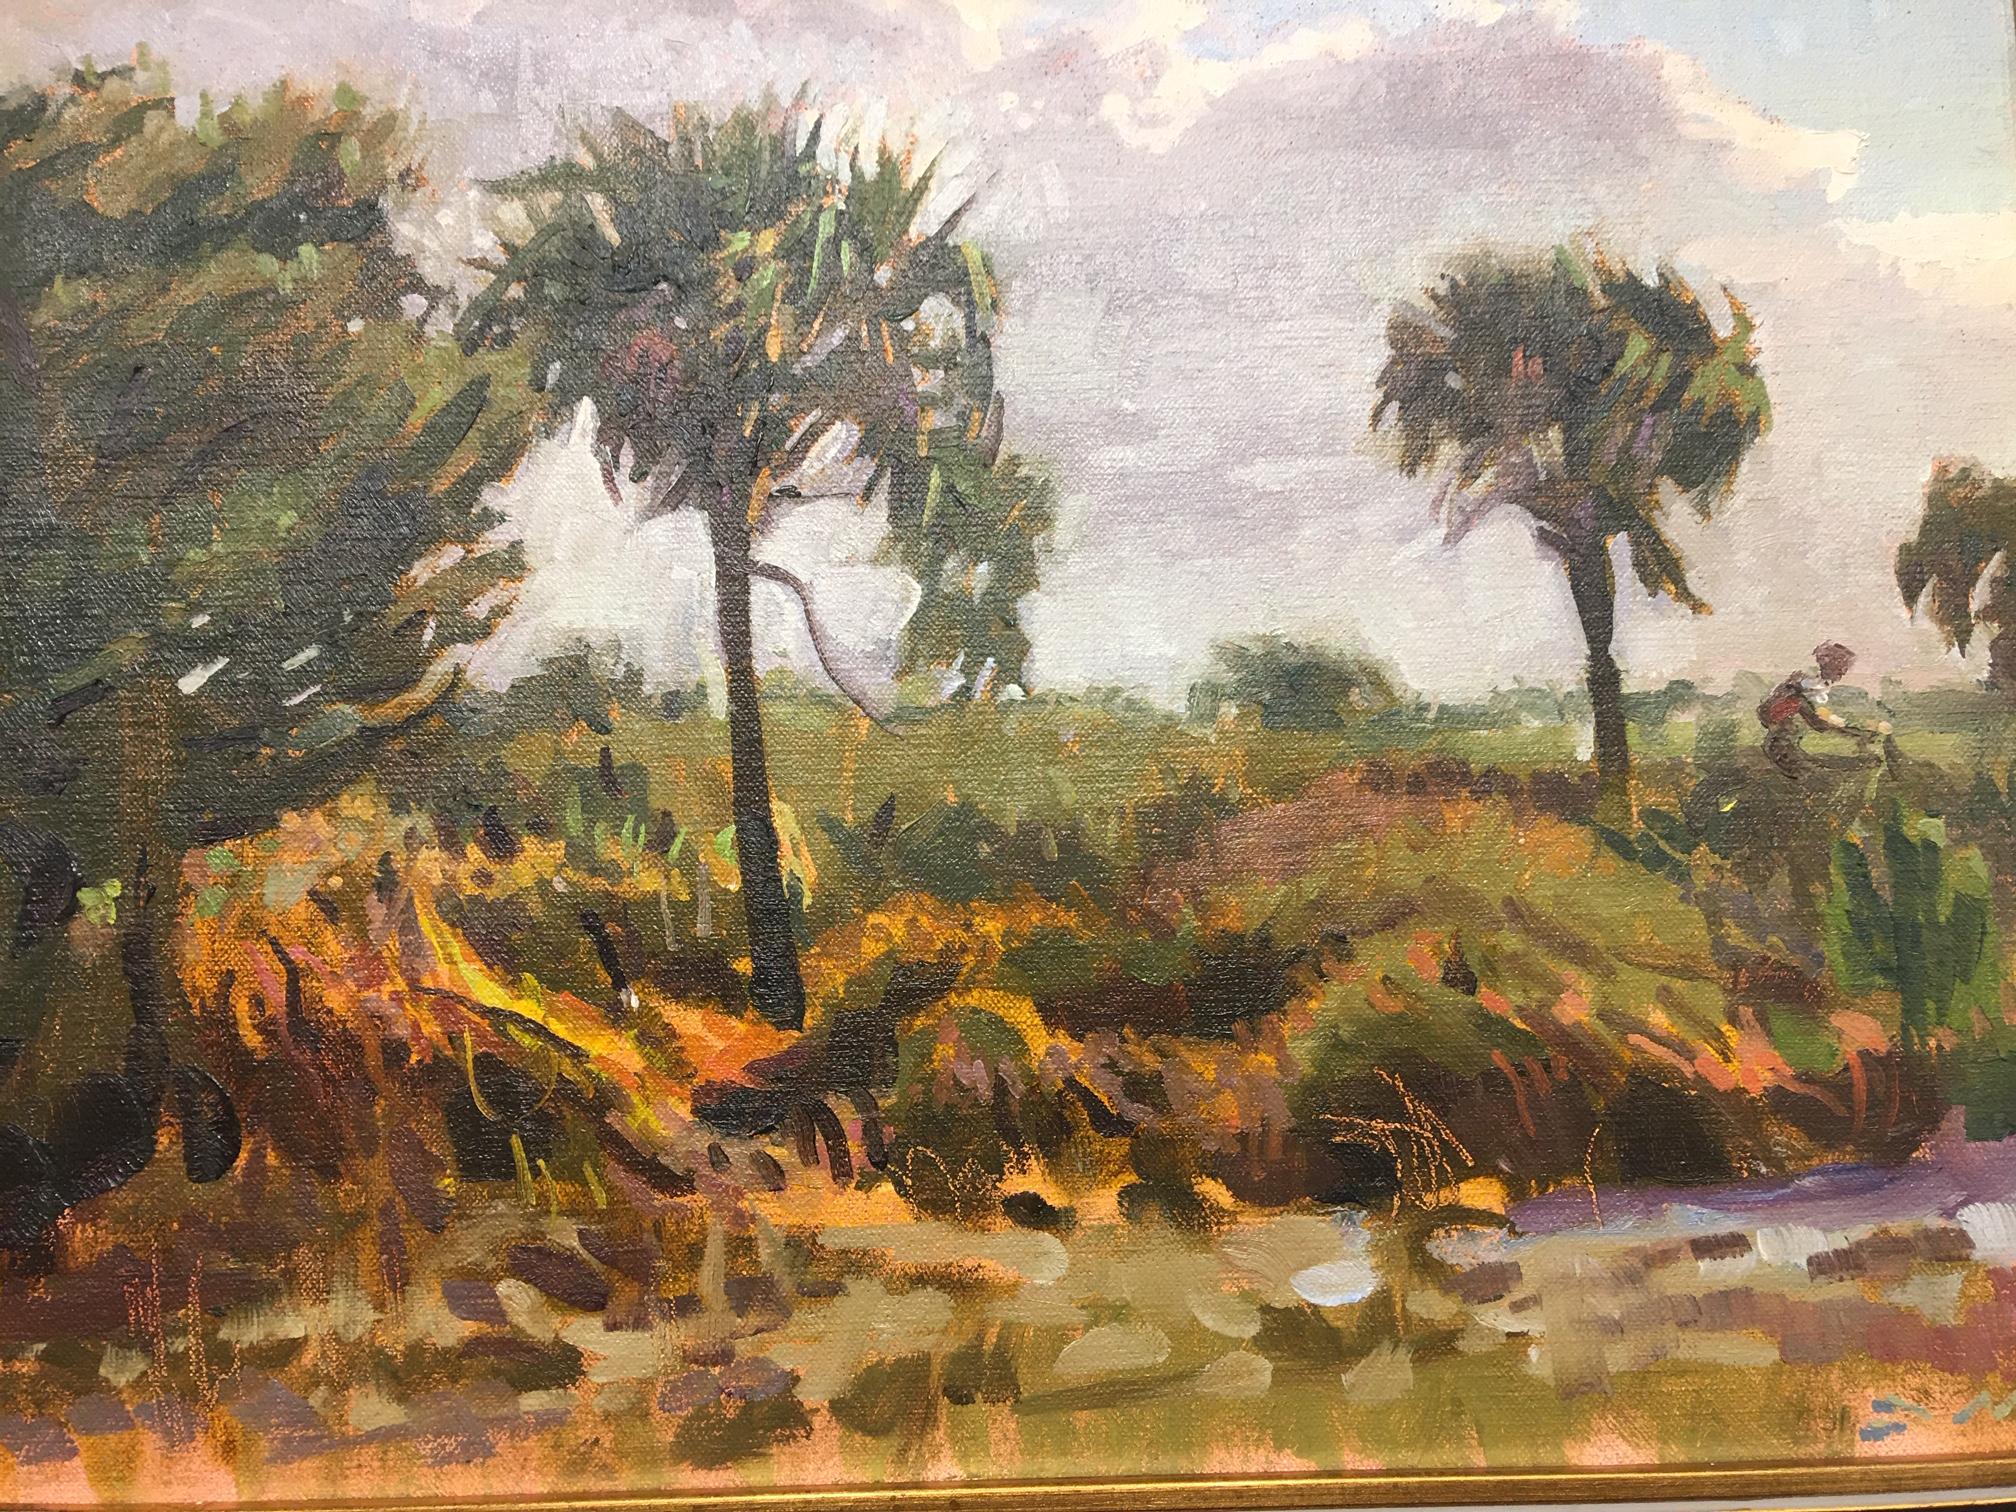 American Framed Oil on Canvas 